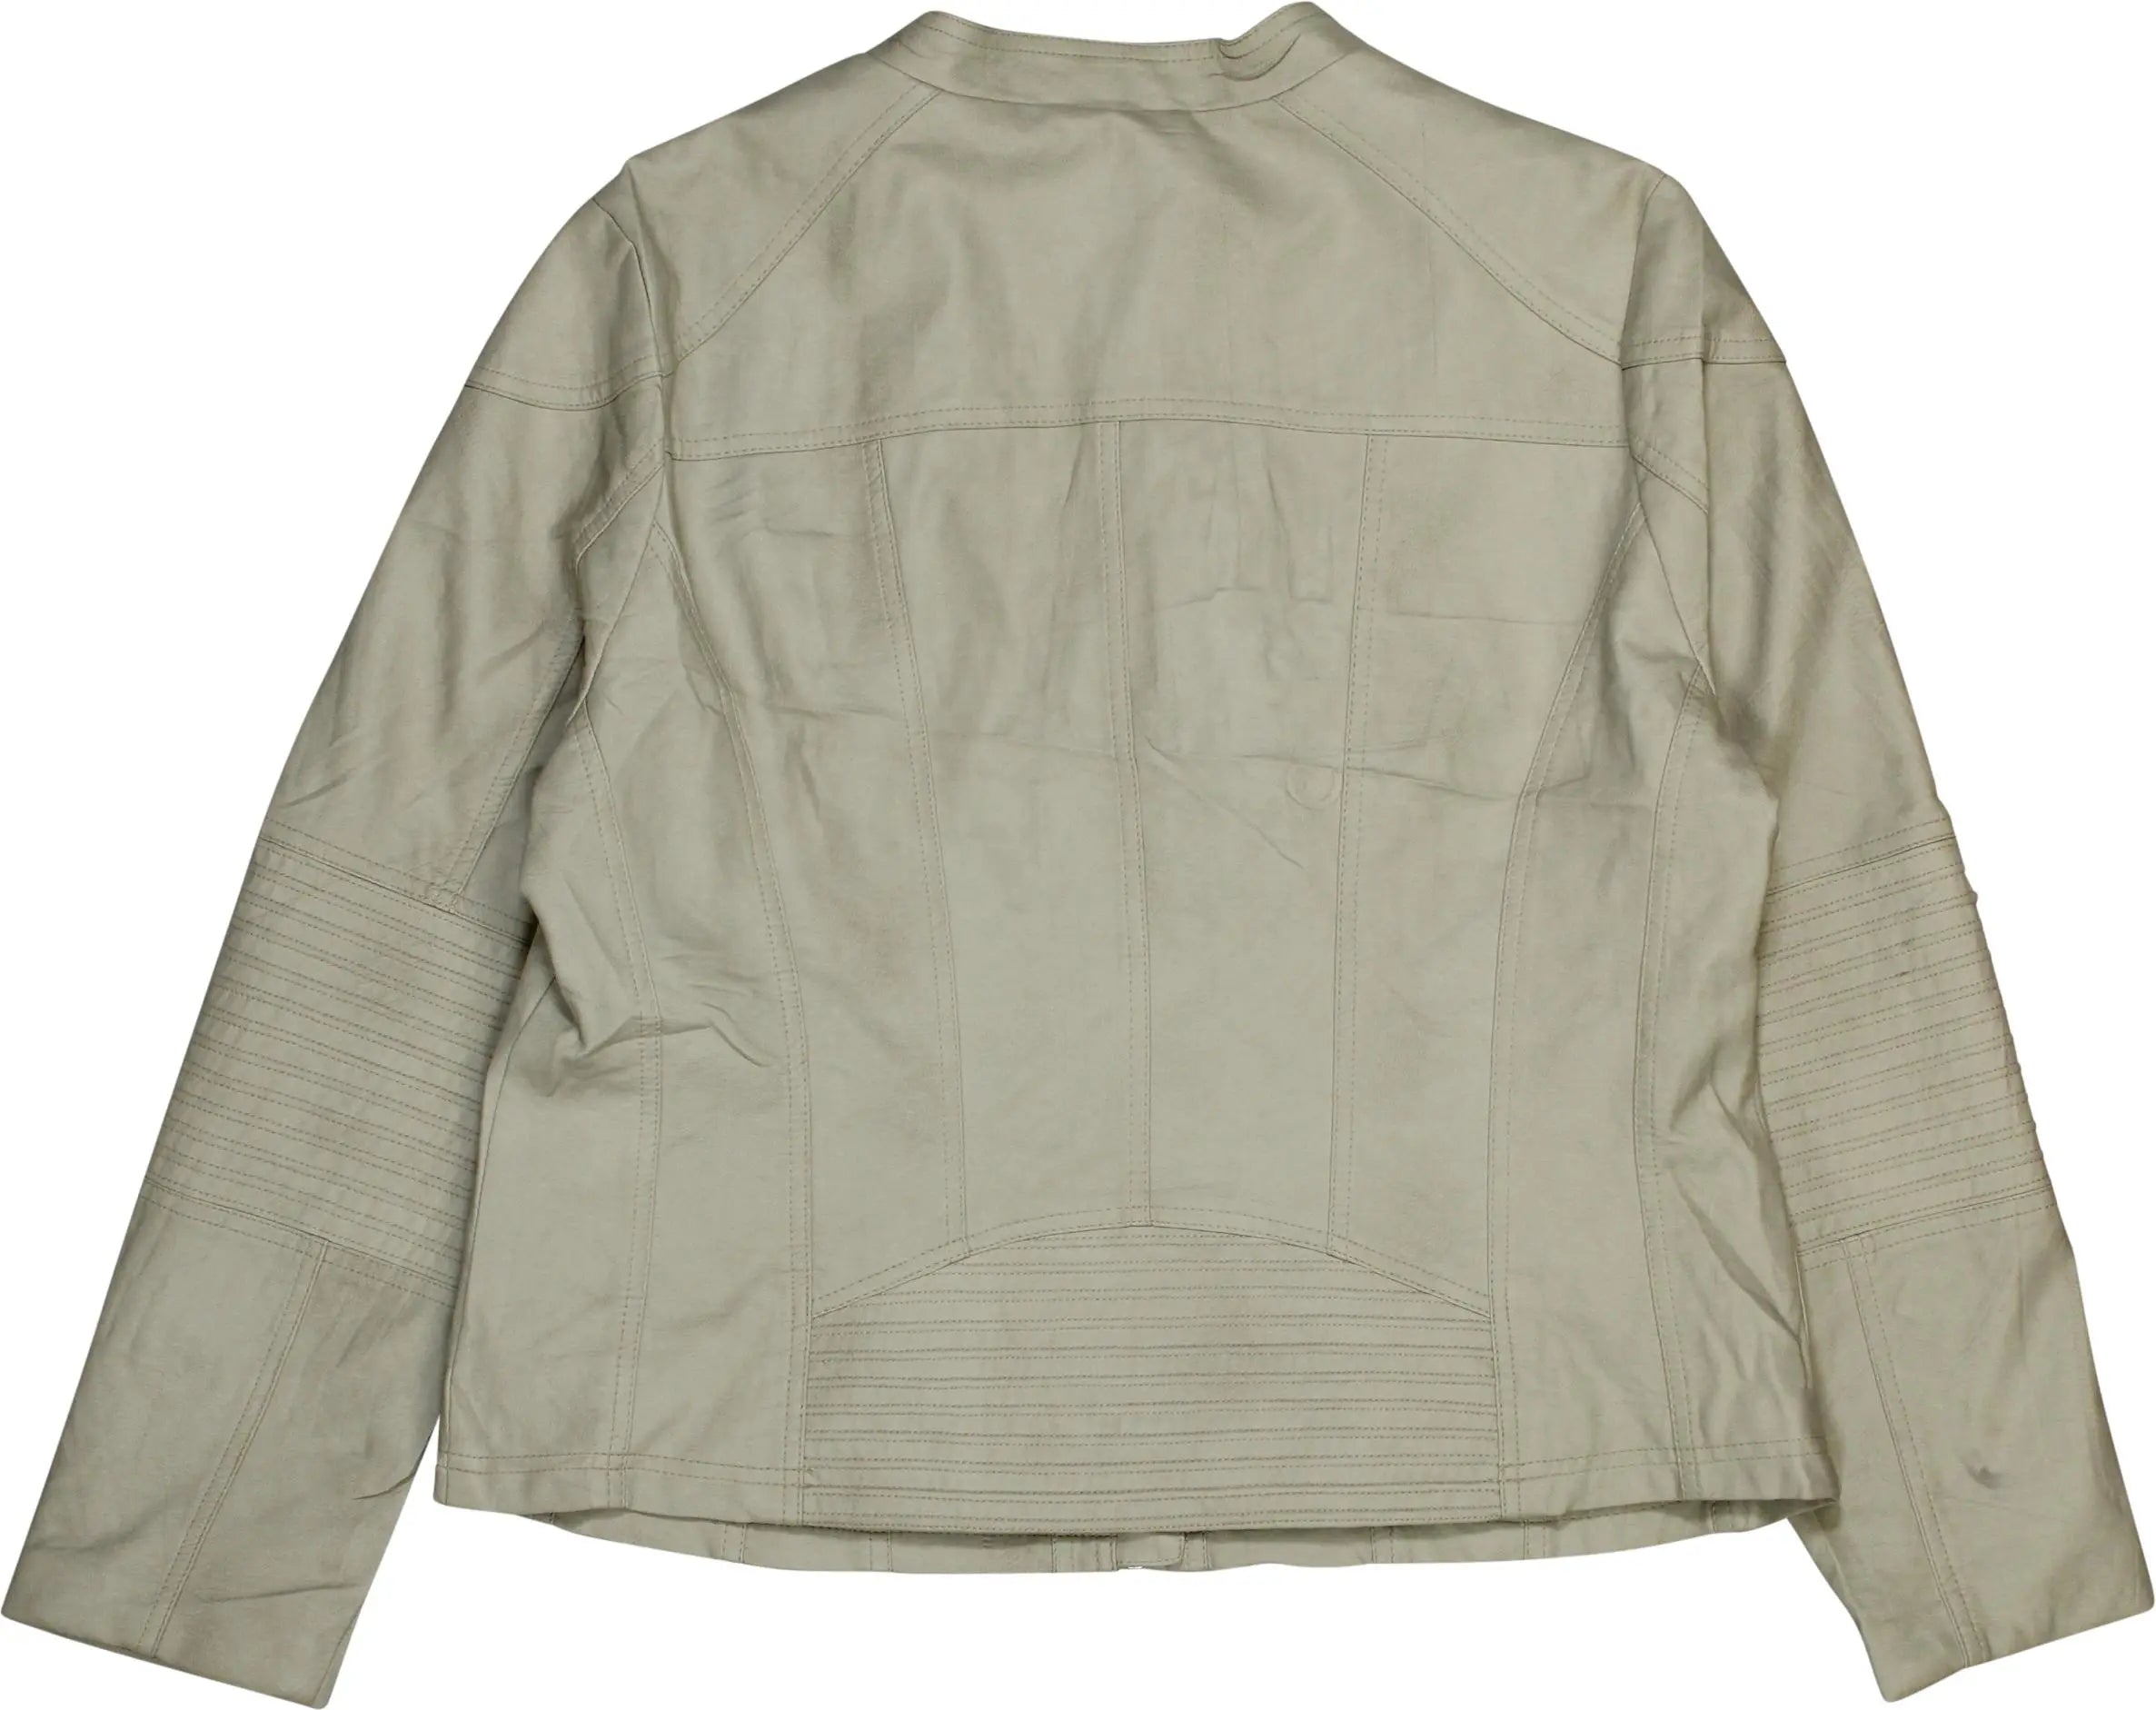 Miss Etam - Cream Leather Jacket- ThriftTale.com - Vintage and second handclothing